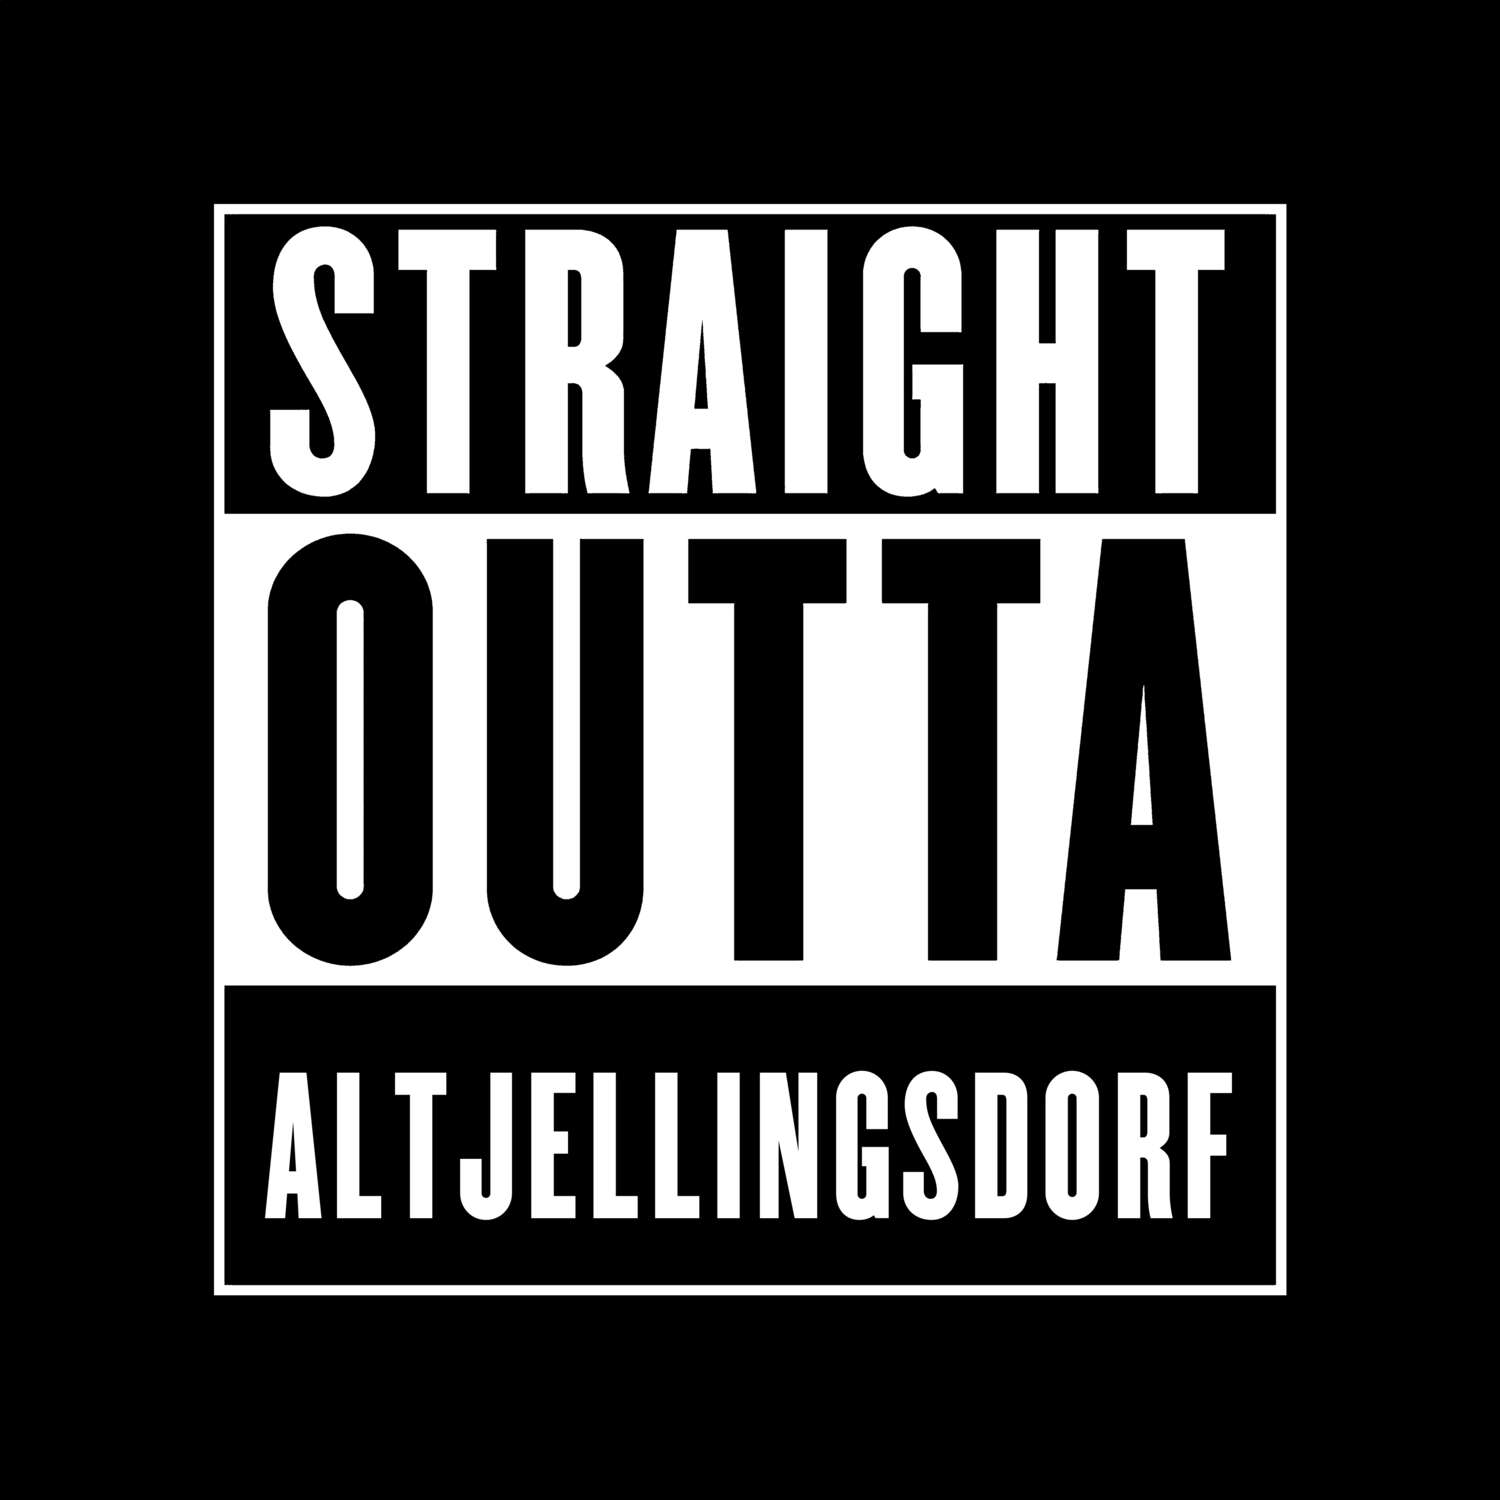 Altjellingsdorf T-Shirt »Straight Outta«